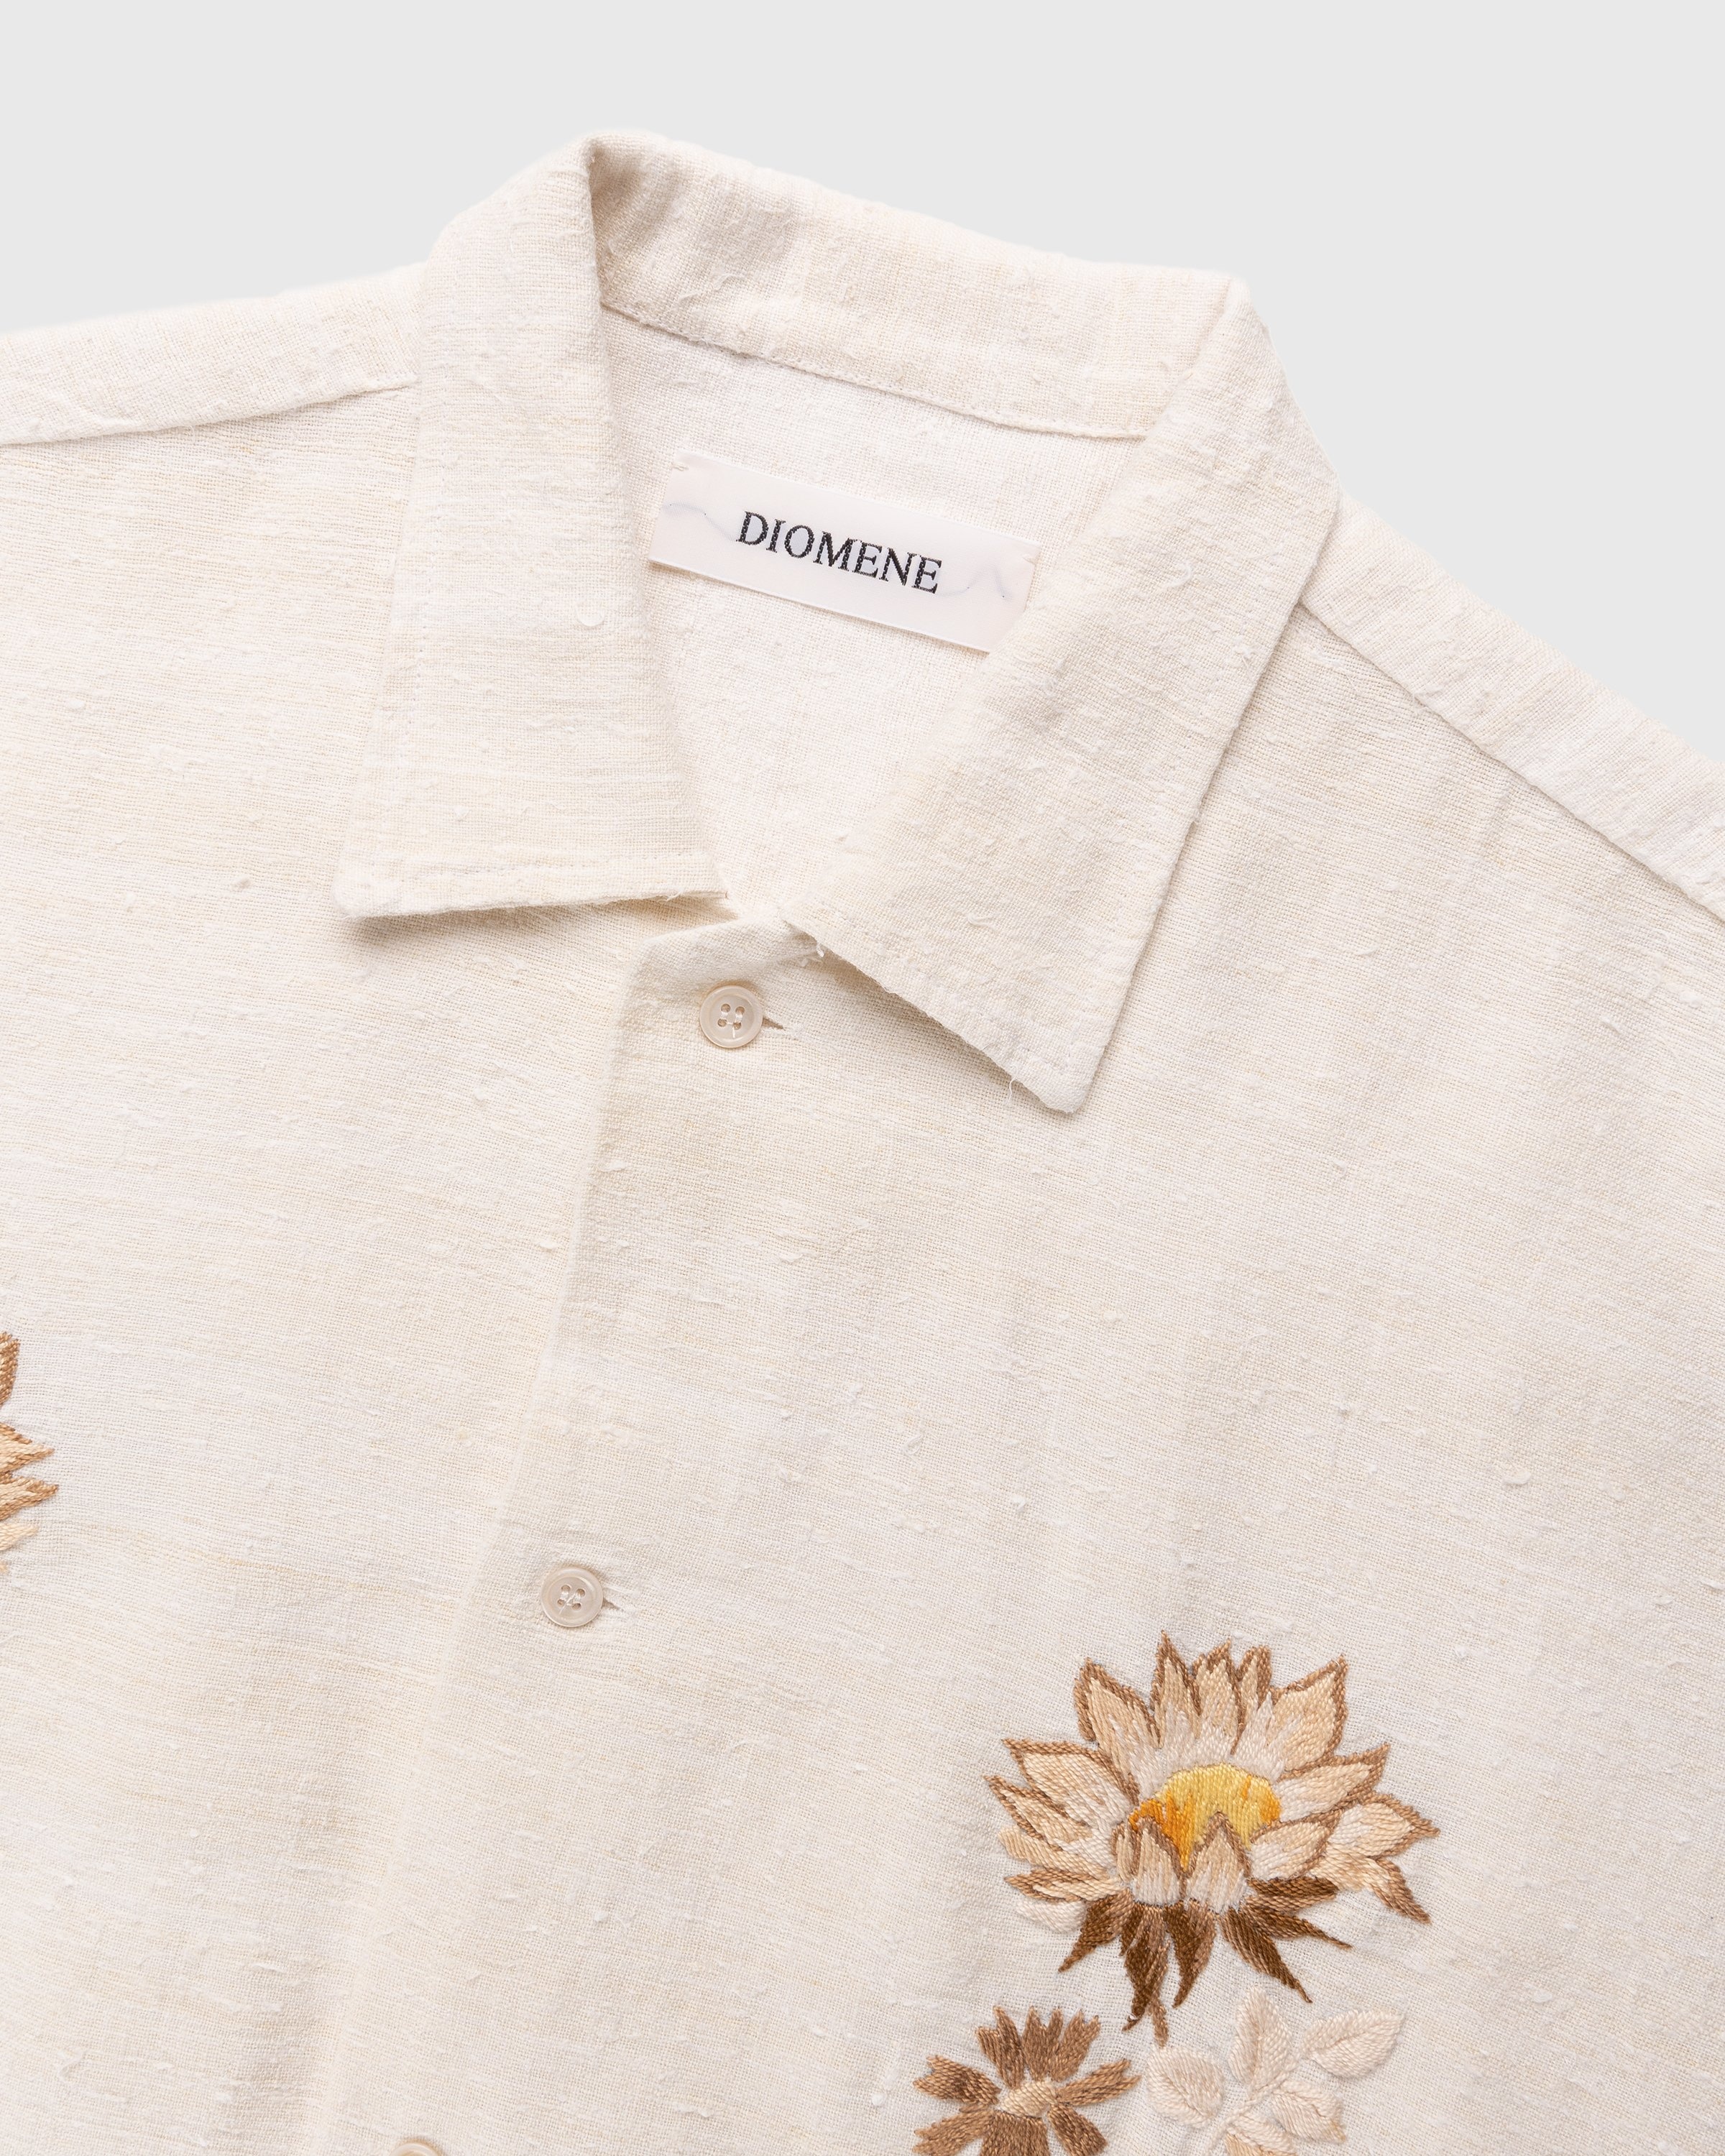 Diomene by Damir Doma – Embroidered Vacation Shirt Cream - Shortsleeve Shirts - White - Image 4